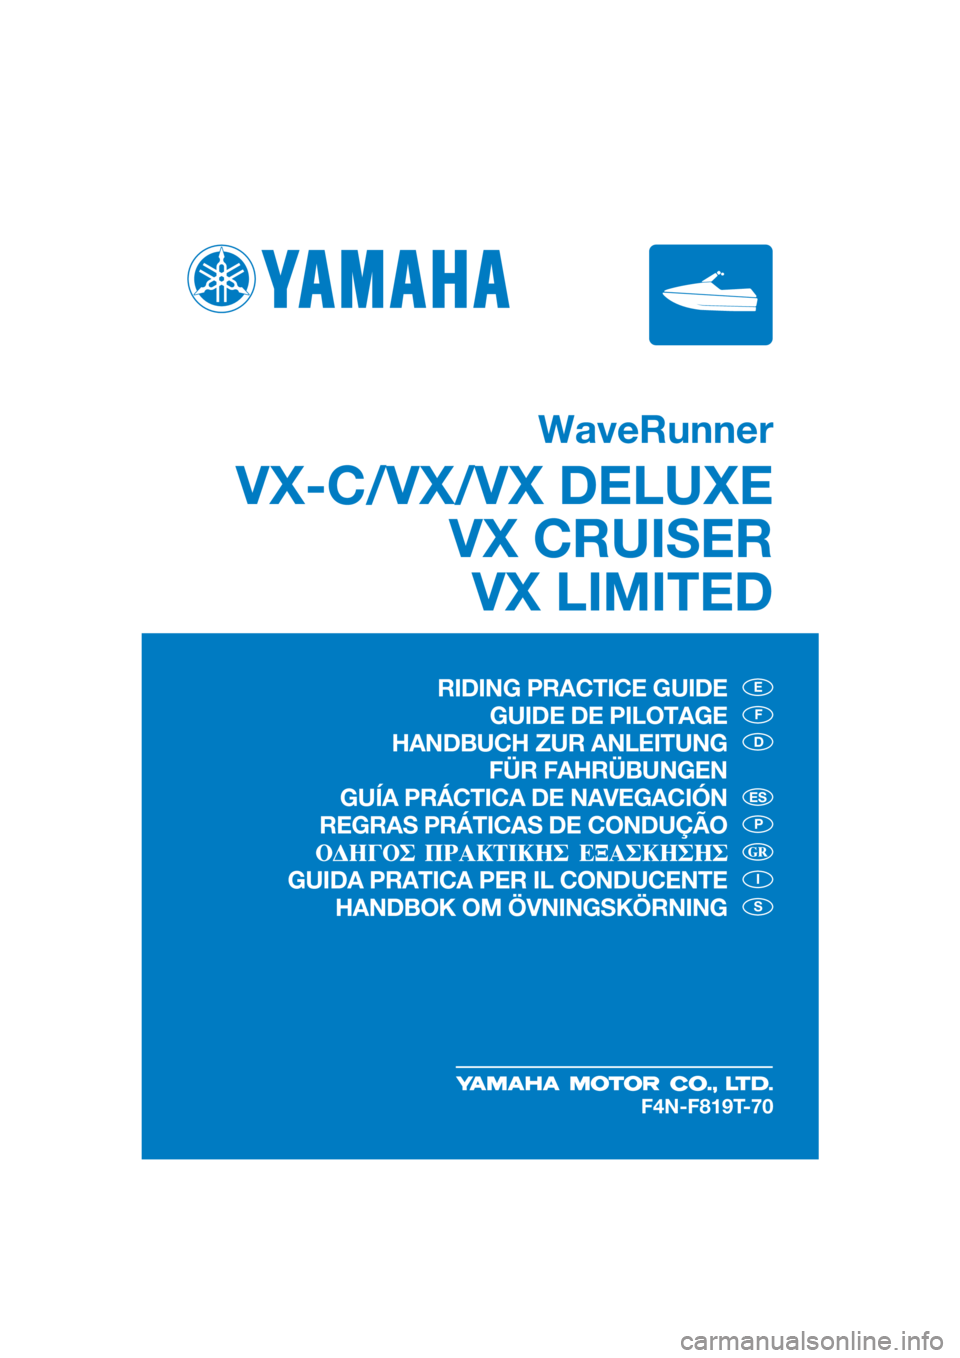 YAMAHA VX-C 2021  Manuale de Empleo (in Spanish) WaveRunner
VX-C/VX/VX DELUXEVX CRUISERVX LIMITED
E
F
D
P
I
S
ES
F4N-F819T-70
RIDING PRACTICE GUIDE
GUIDE DE PILOTAGE
HANDBUCH ZUR ANLEITUNG  FÜR FAHRÜBUNGEN
GUÍA PRÁCTICA DE NAVEGACIÓN
REGRAS PR�